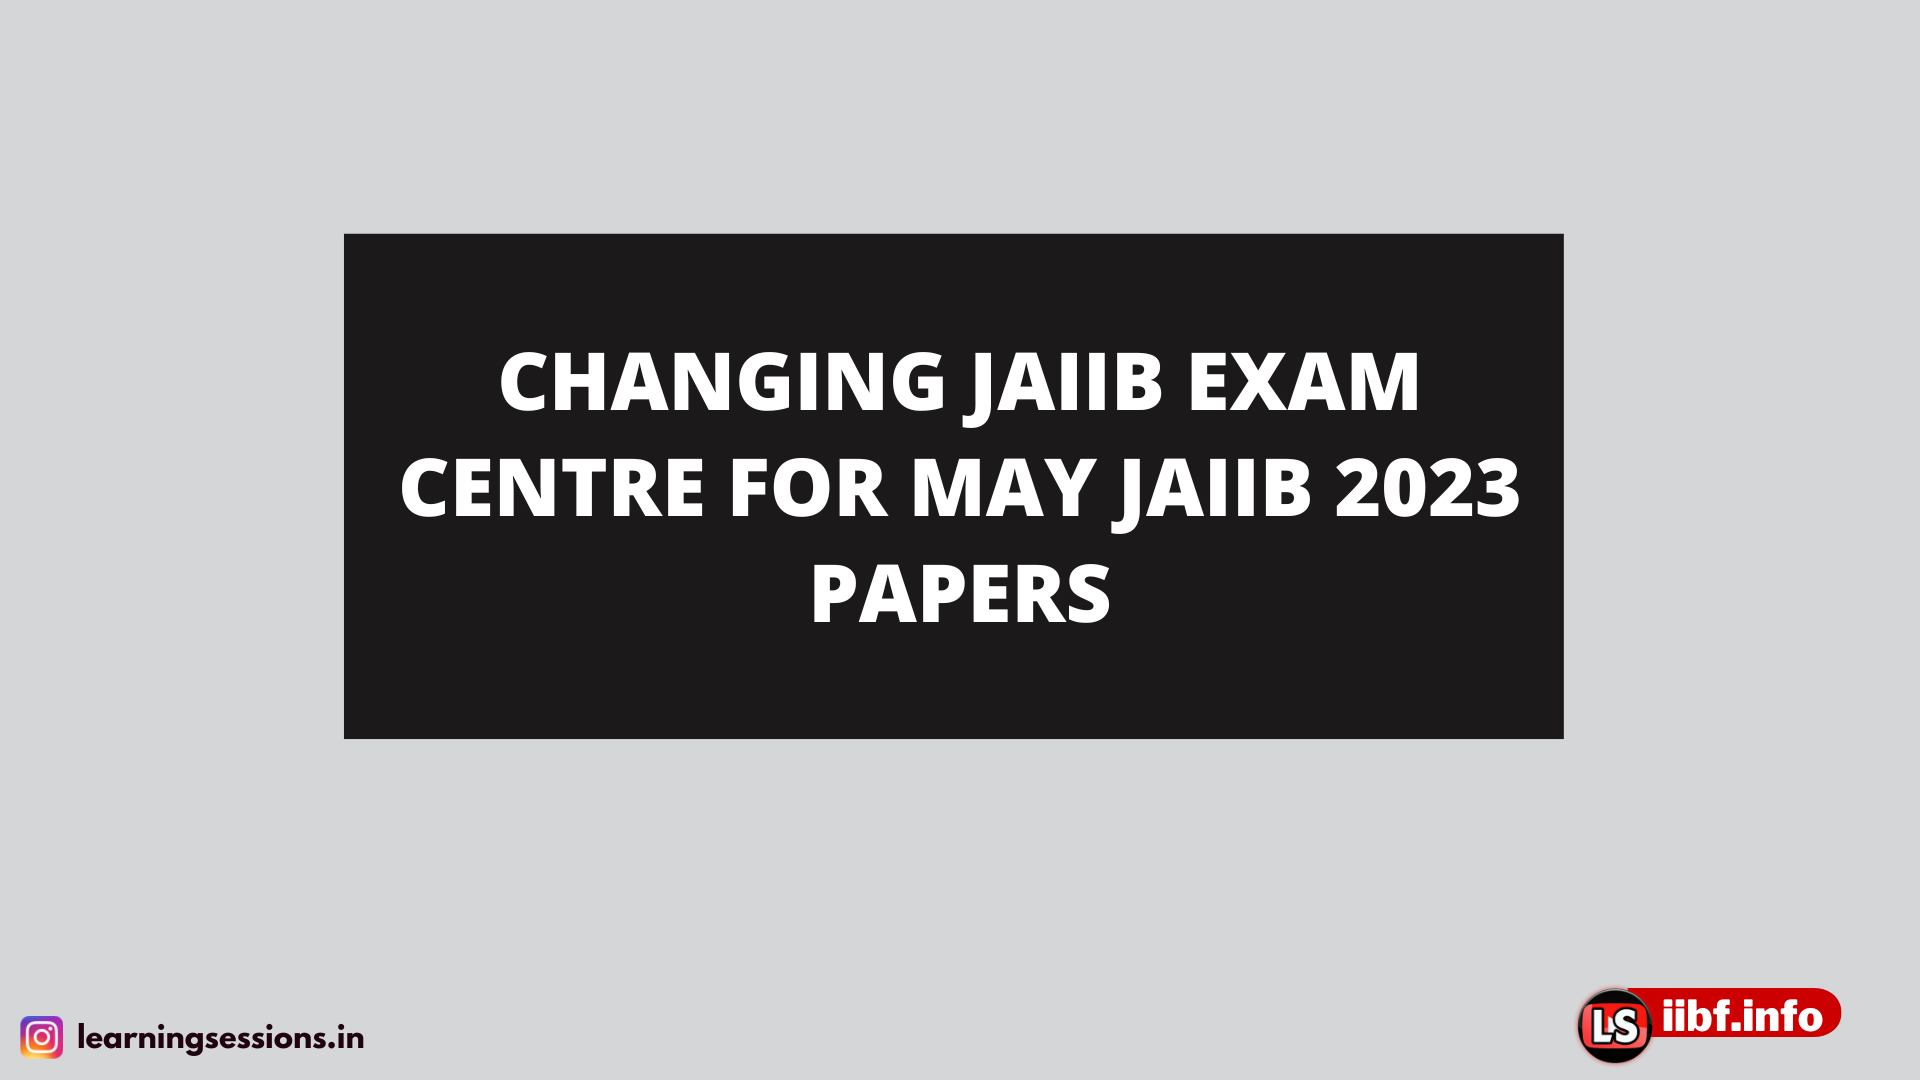 Changing JAIIB Exam Centre for NOVEMBER JAIIB 2022 Exam